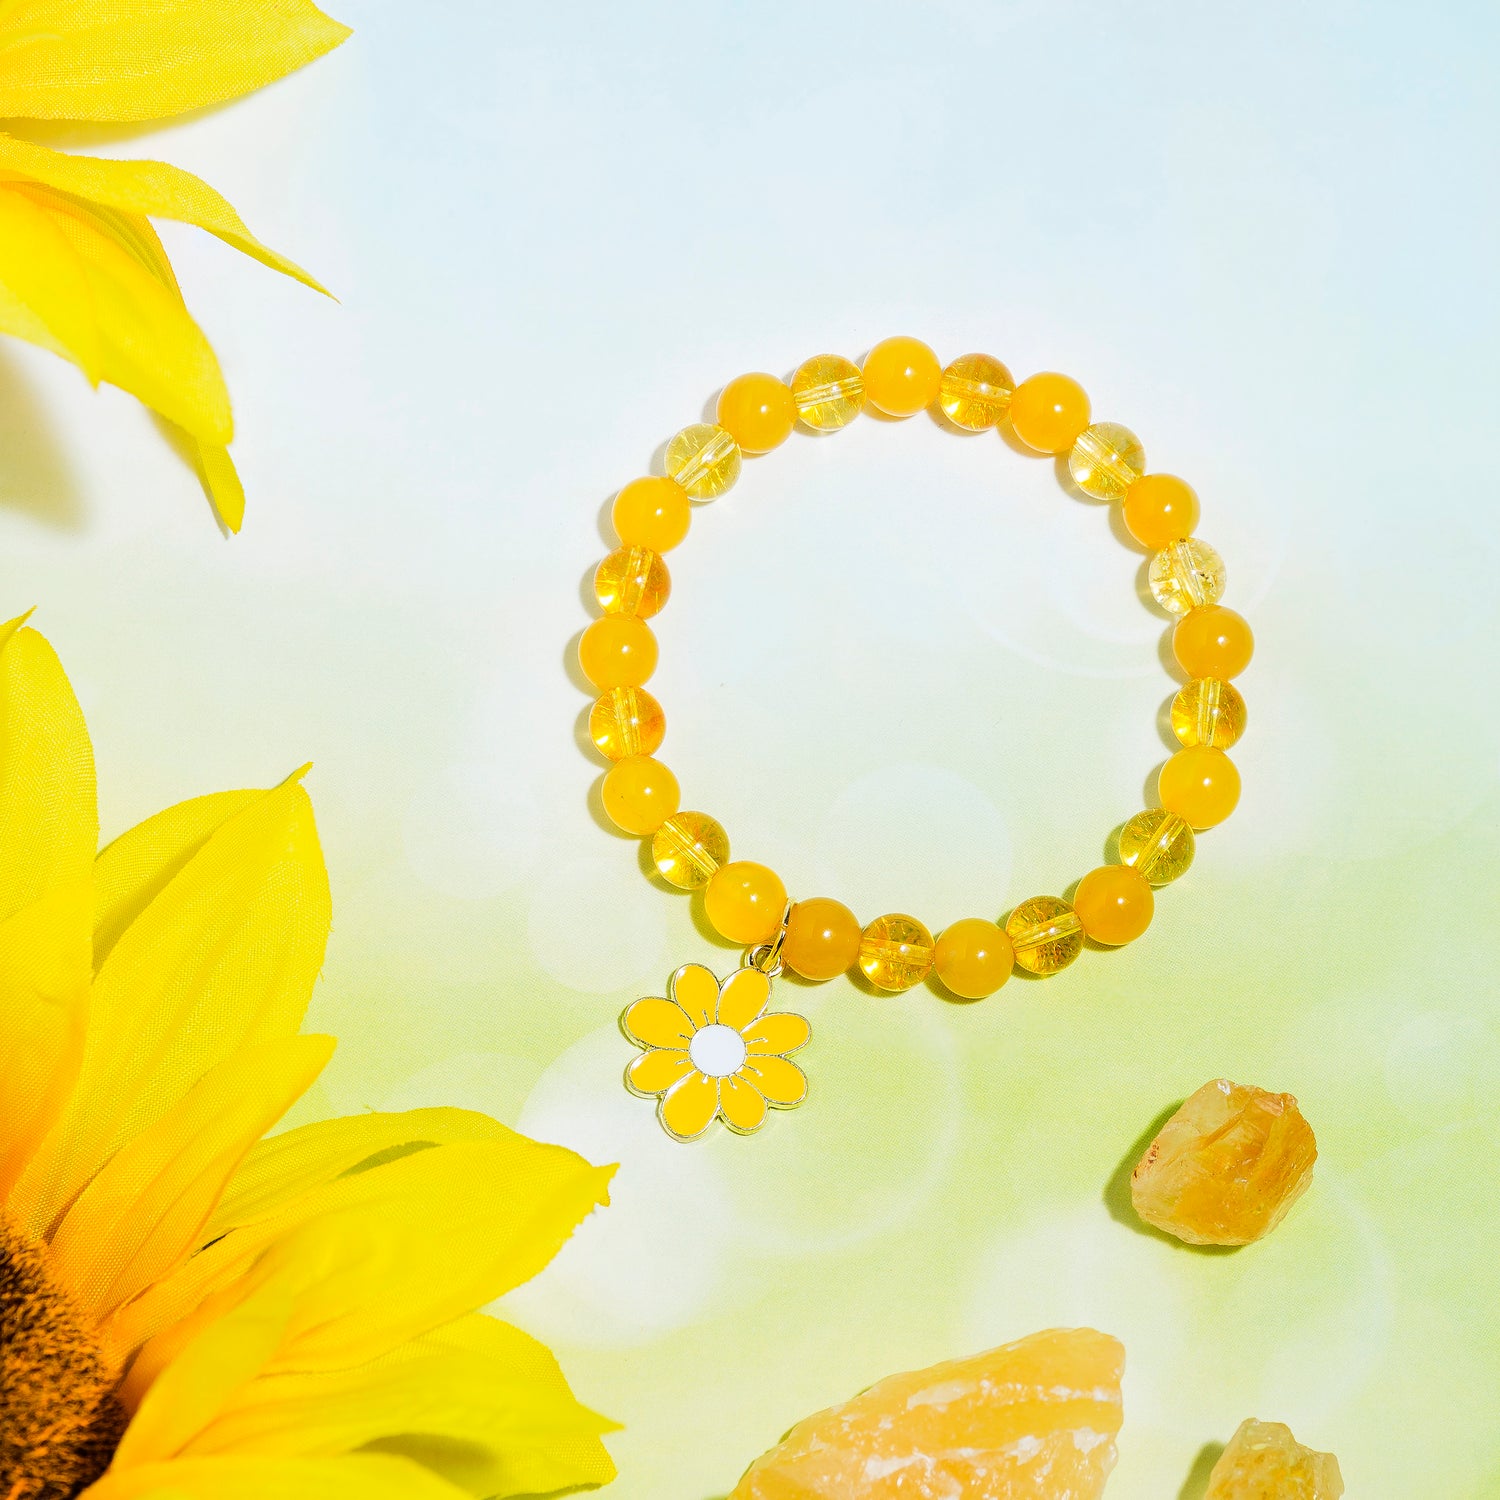 Yellow and Black Beads Spiritual Meaning | TikTok